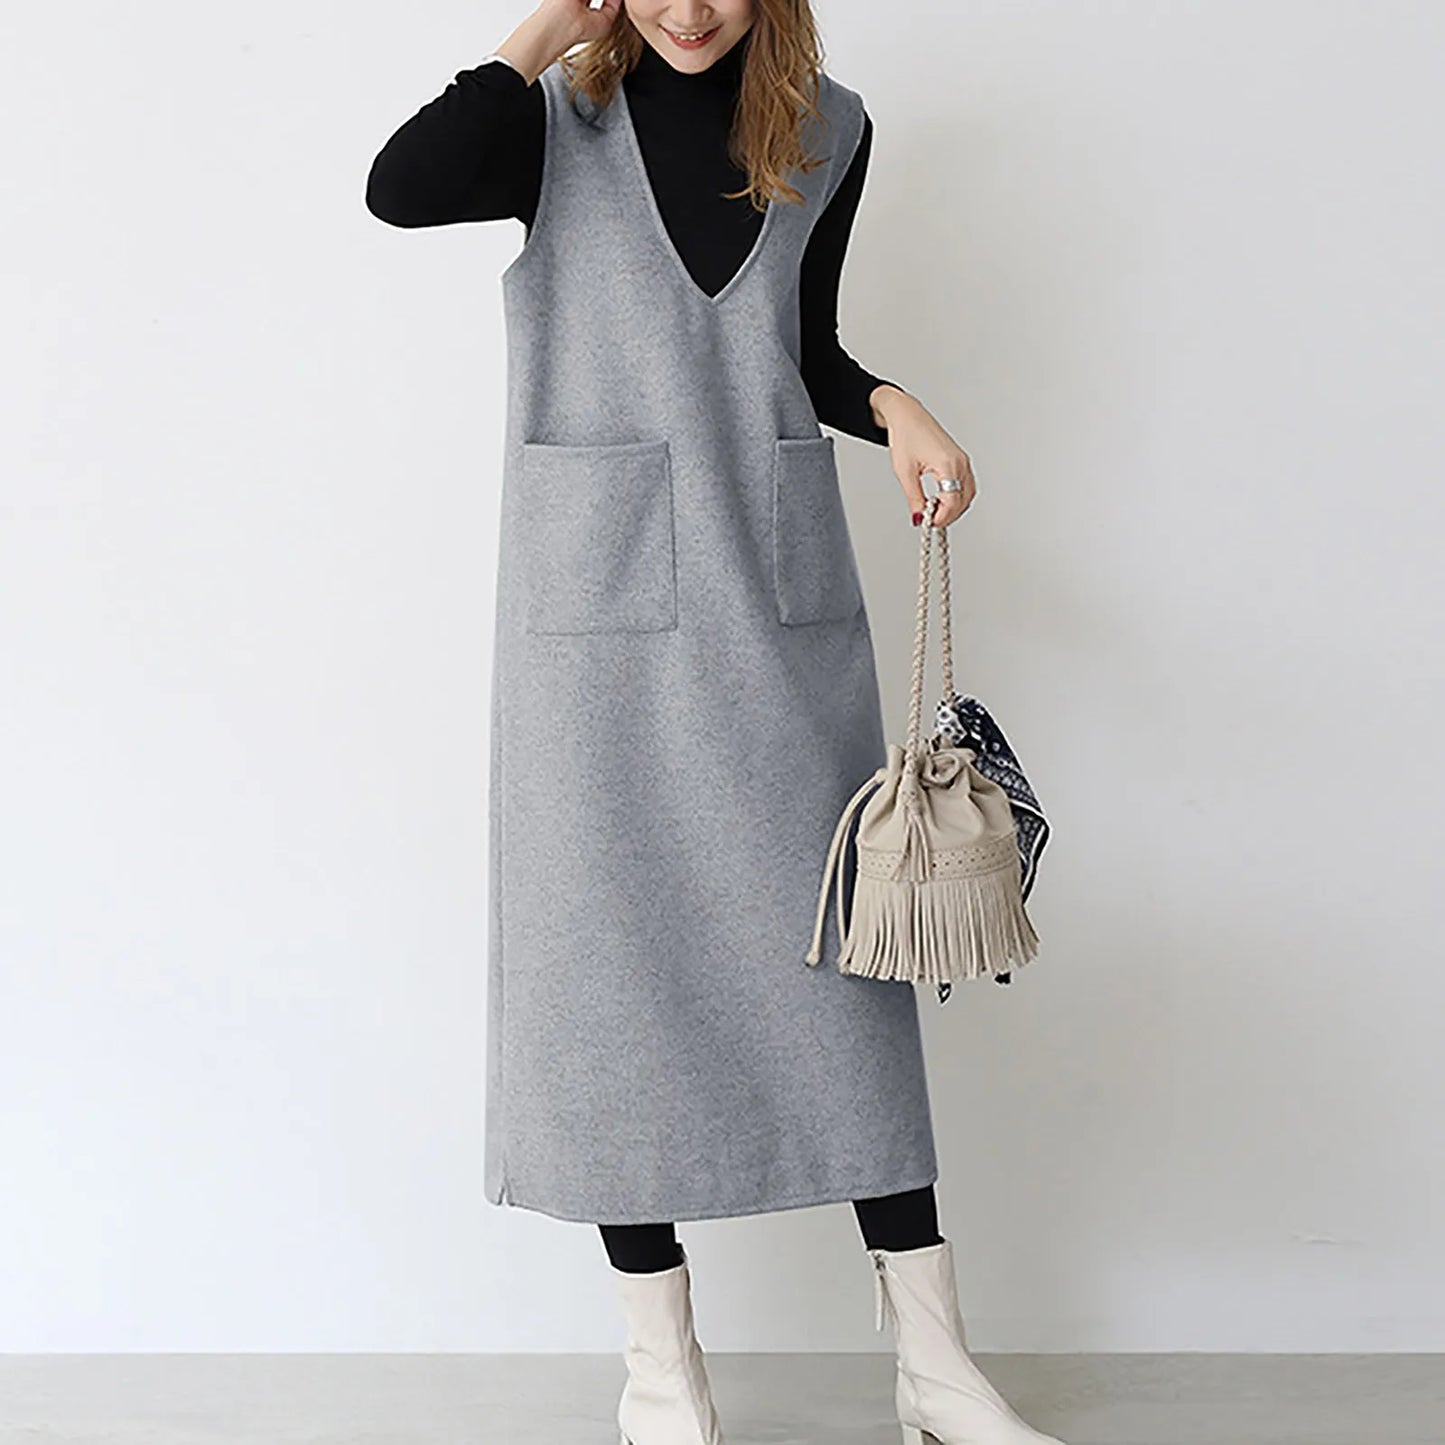 JuliaFashion - V Neck Sleeveless Knitted Solid Color Long Sweater Autumn Winter Elegant Korean Style Long Vest With Pocket Dress